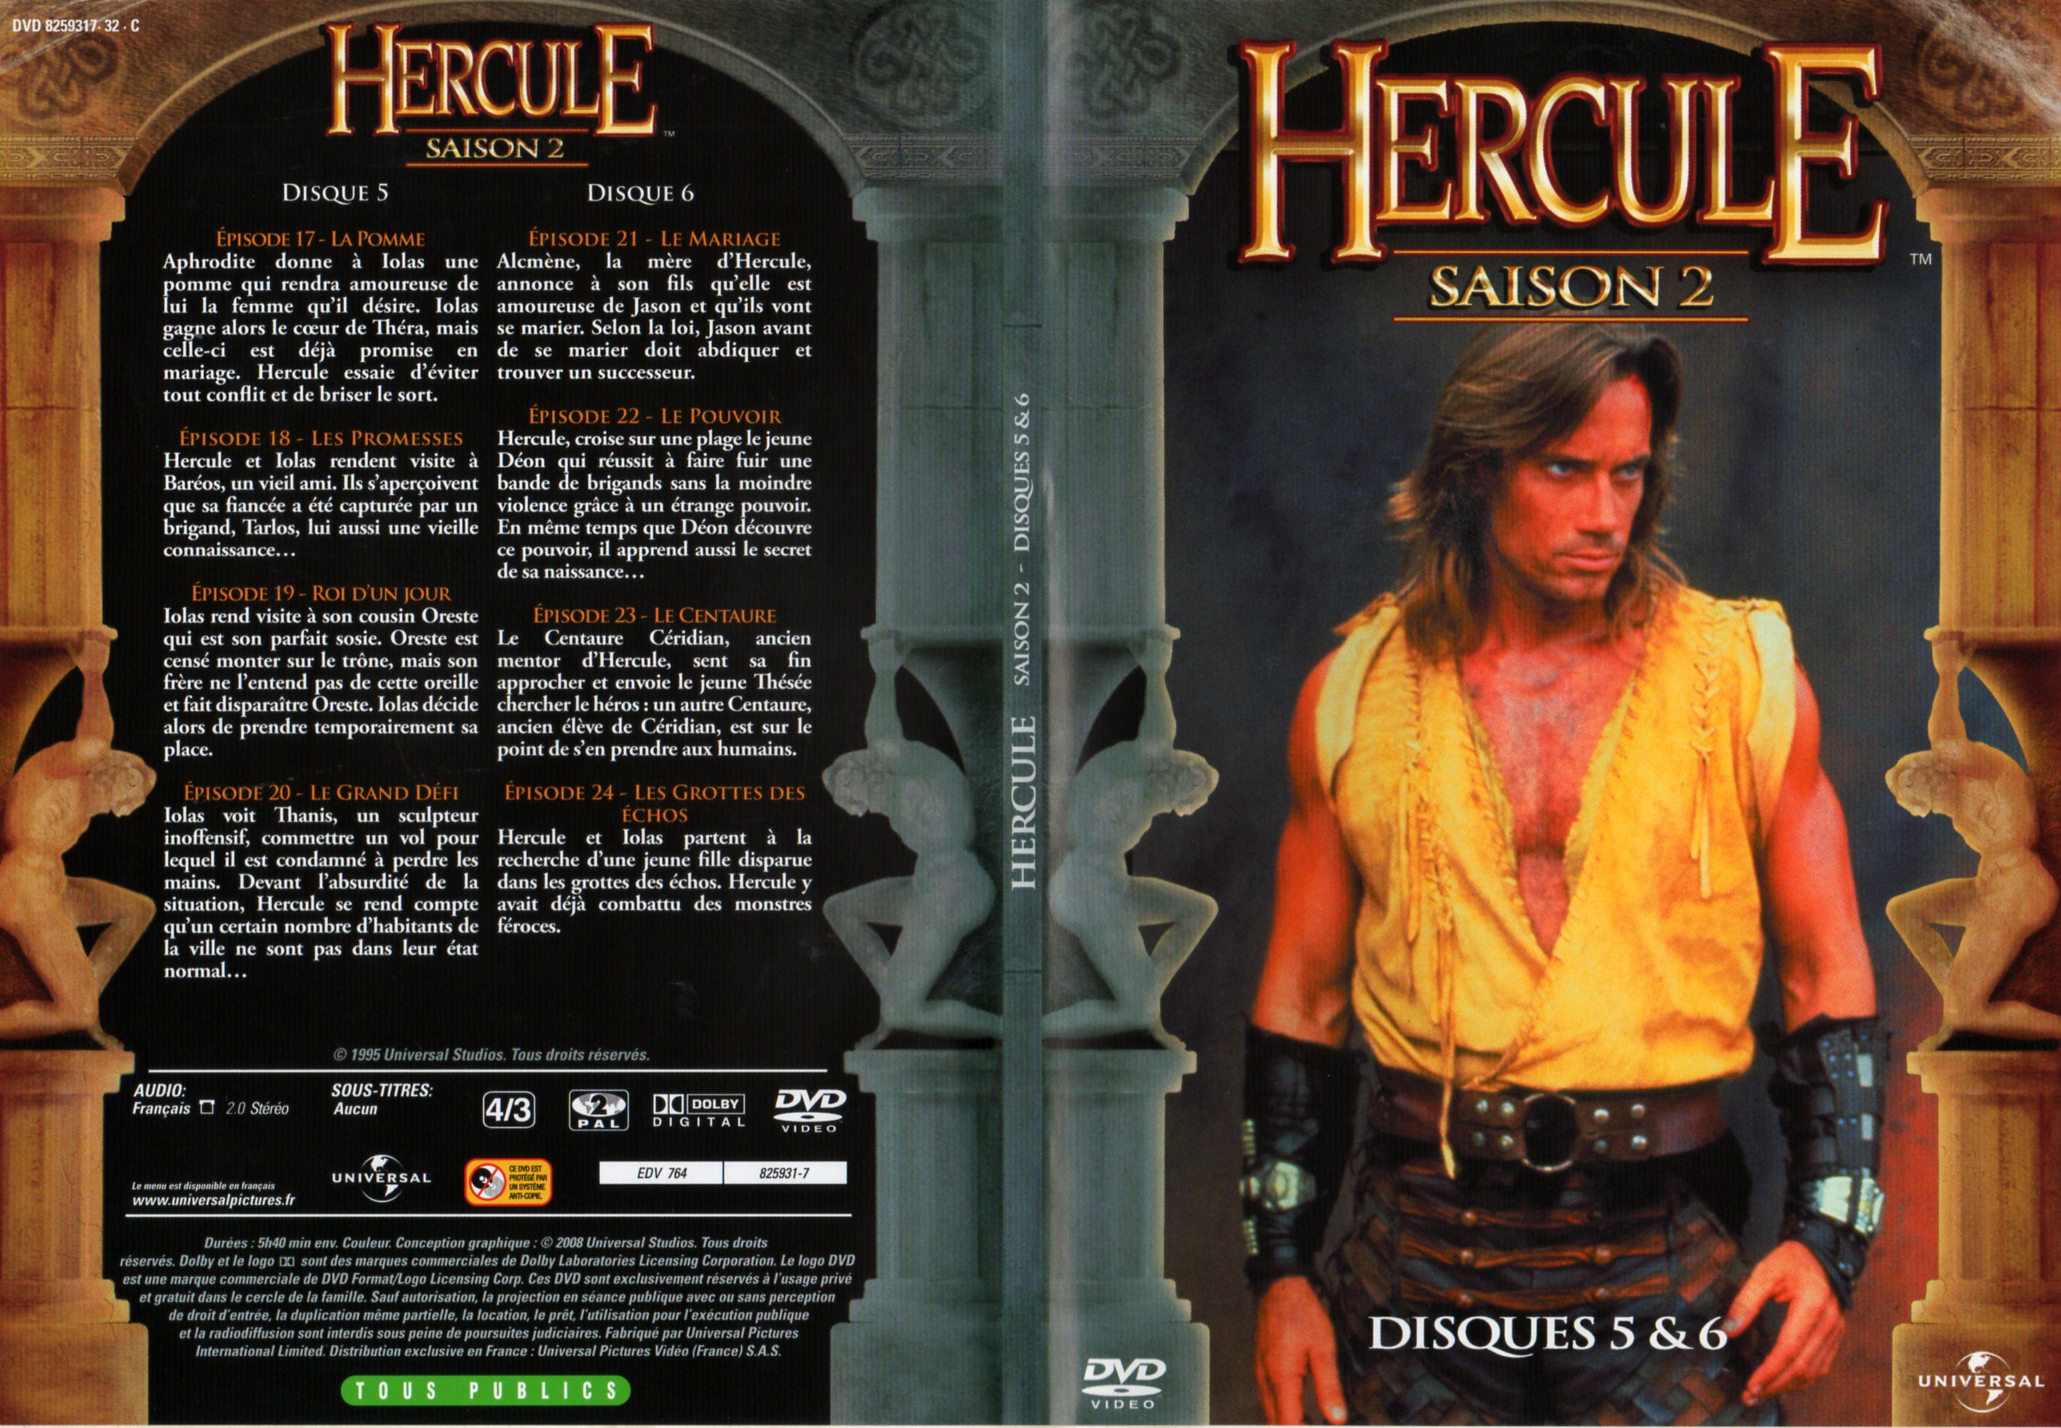 Jaquette DVD Hercule Saison 2 DVD 3